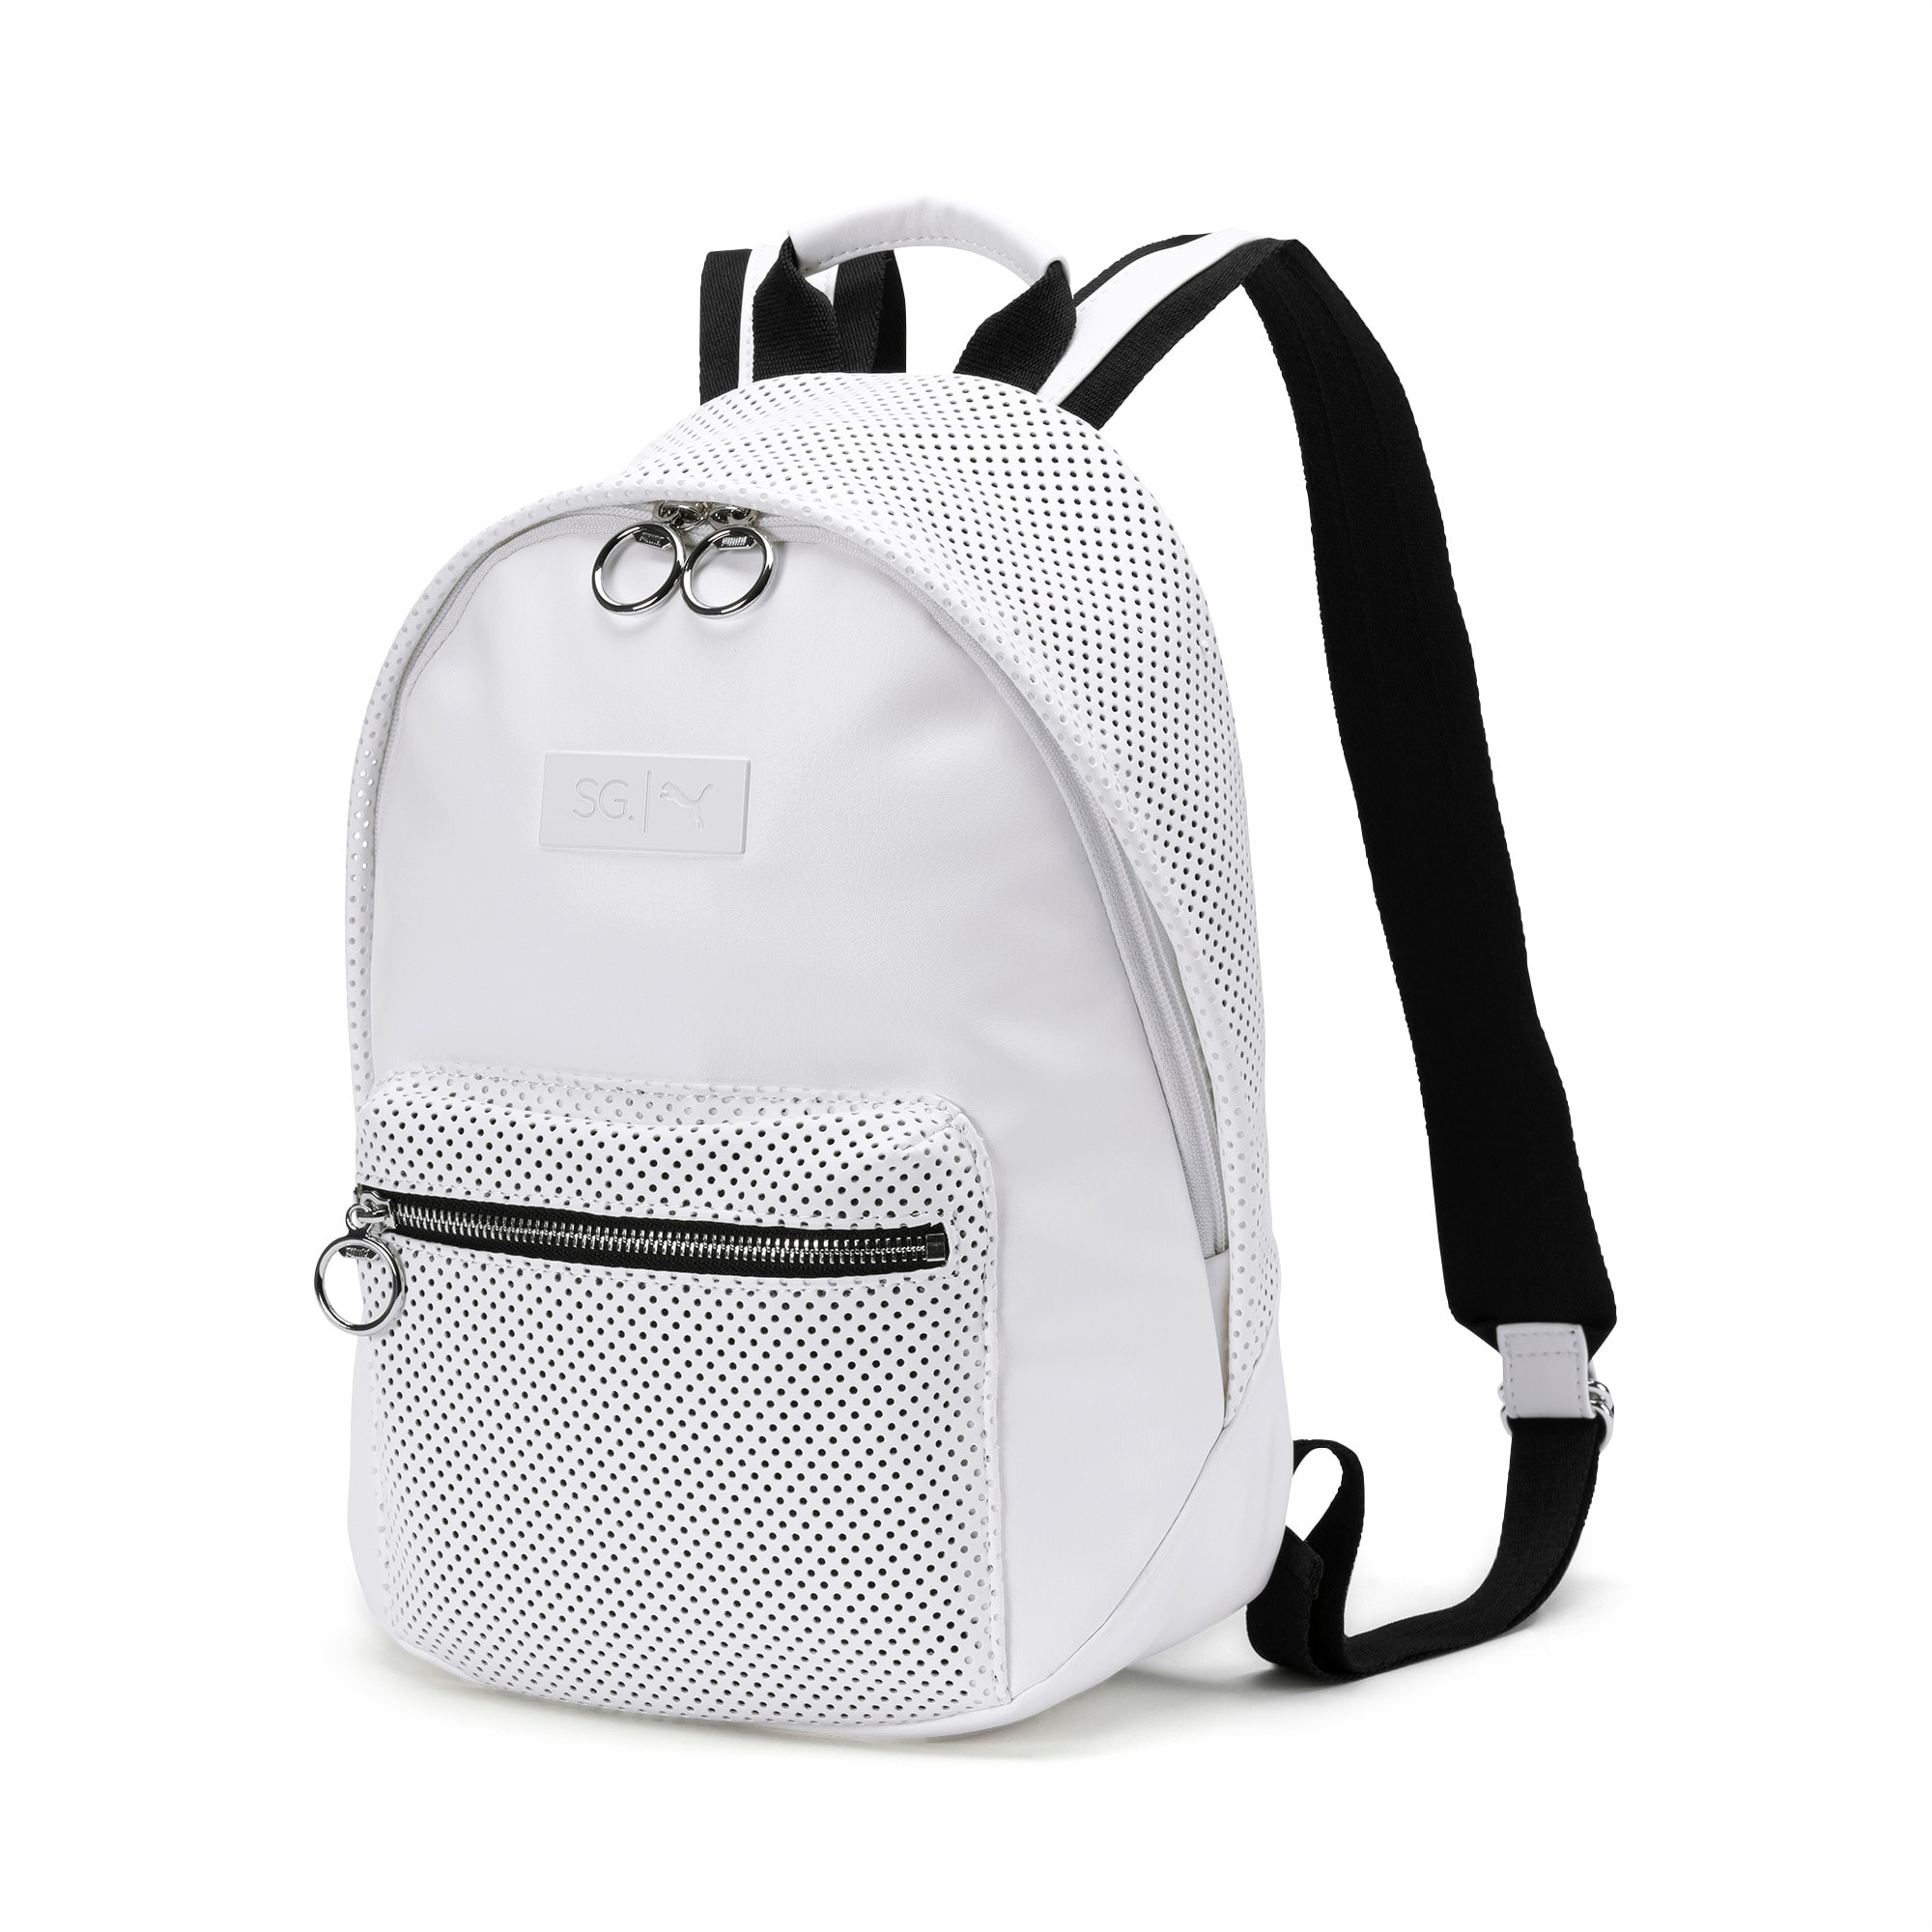 SG x PUMA Style Backpack | PUMA US